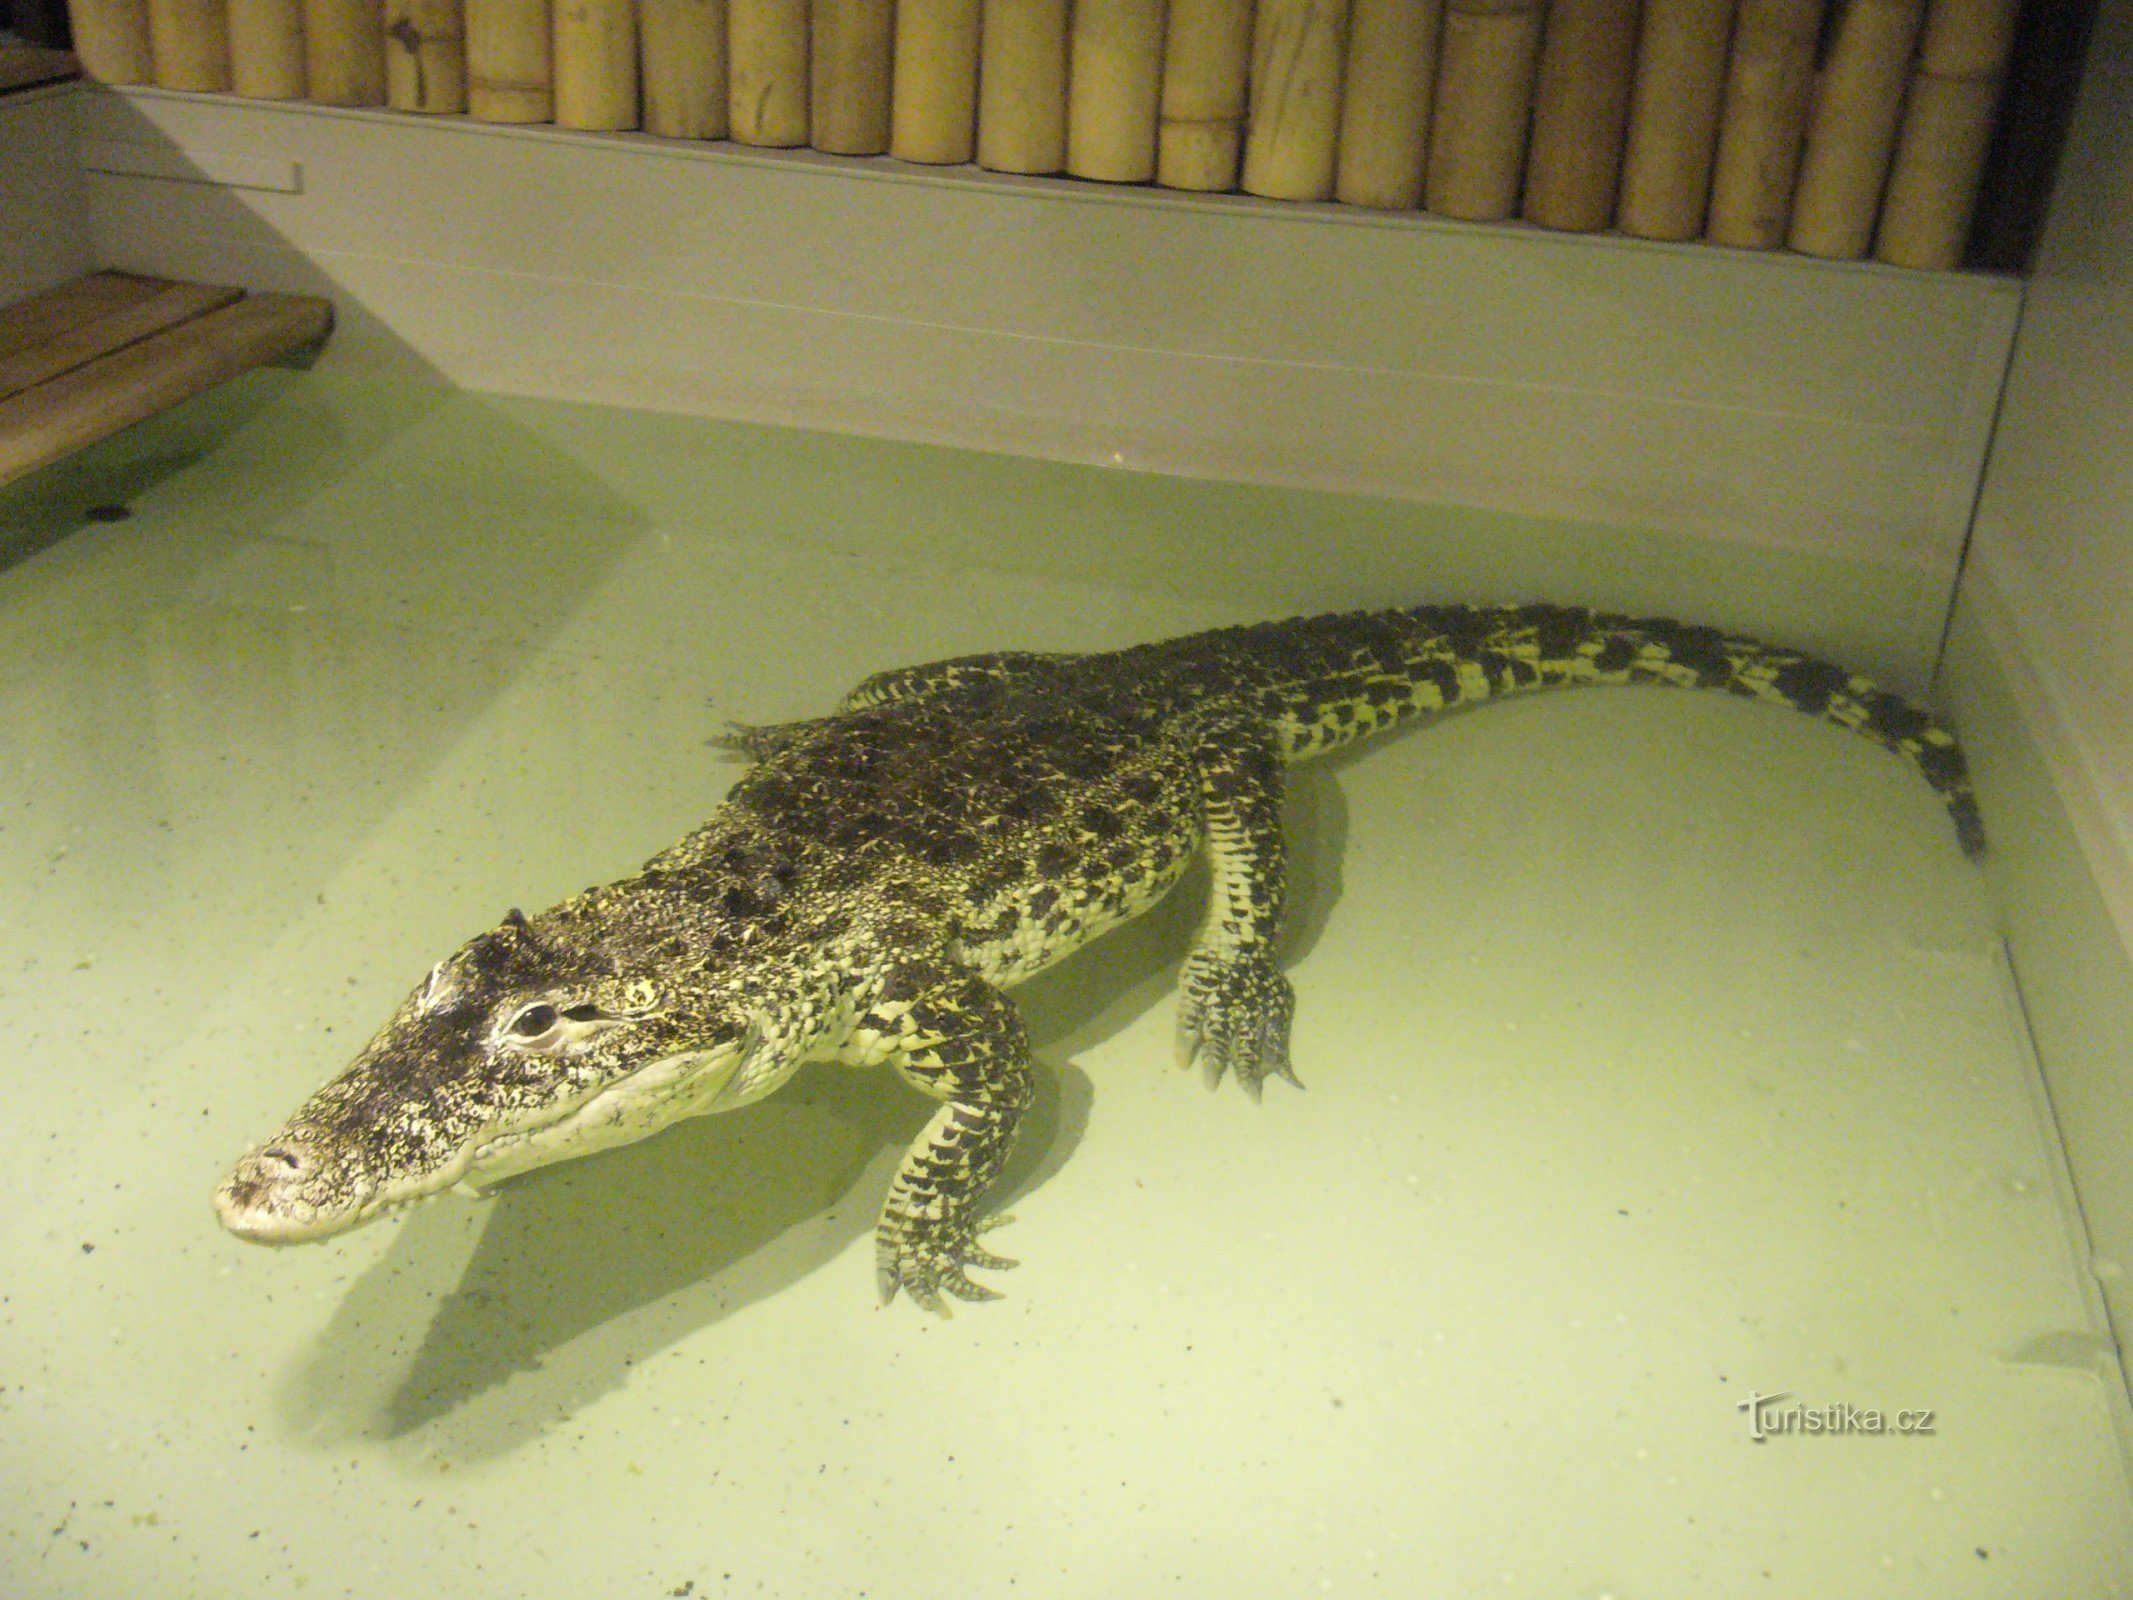 Zoo crocodiles